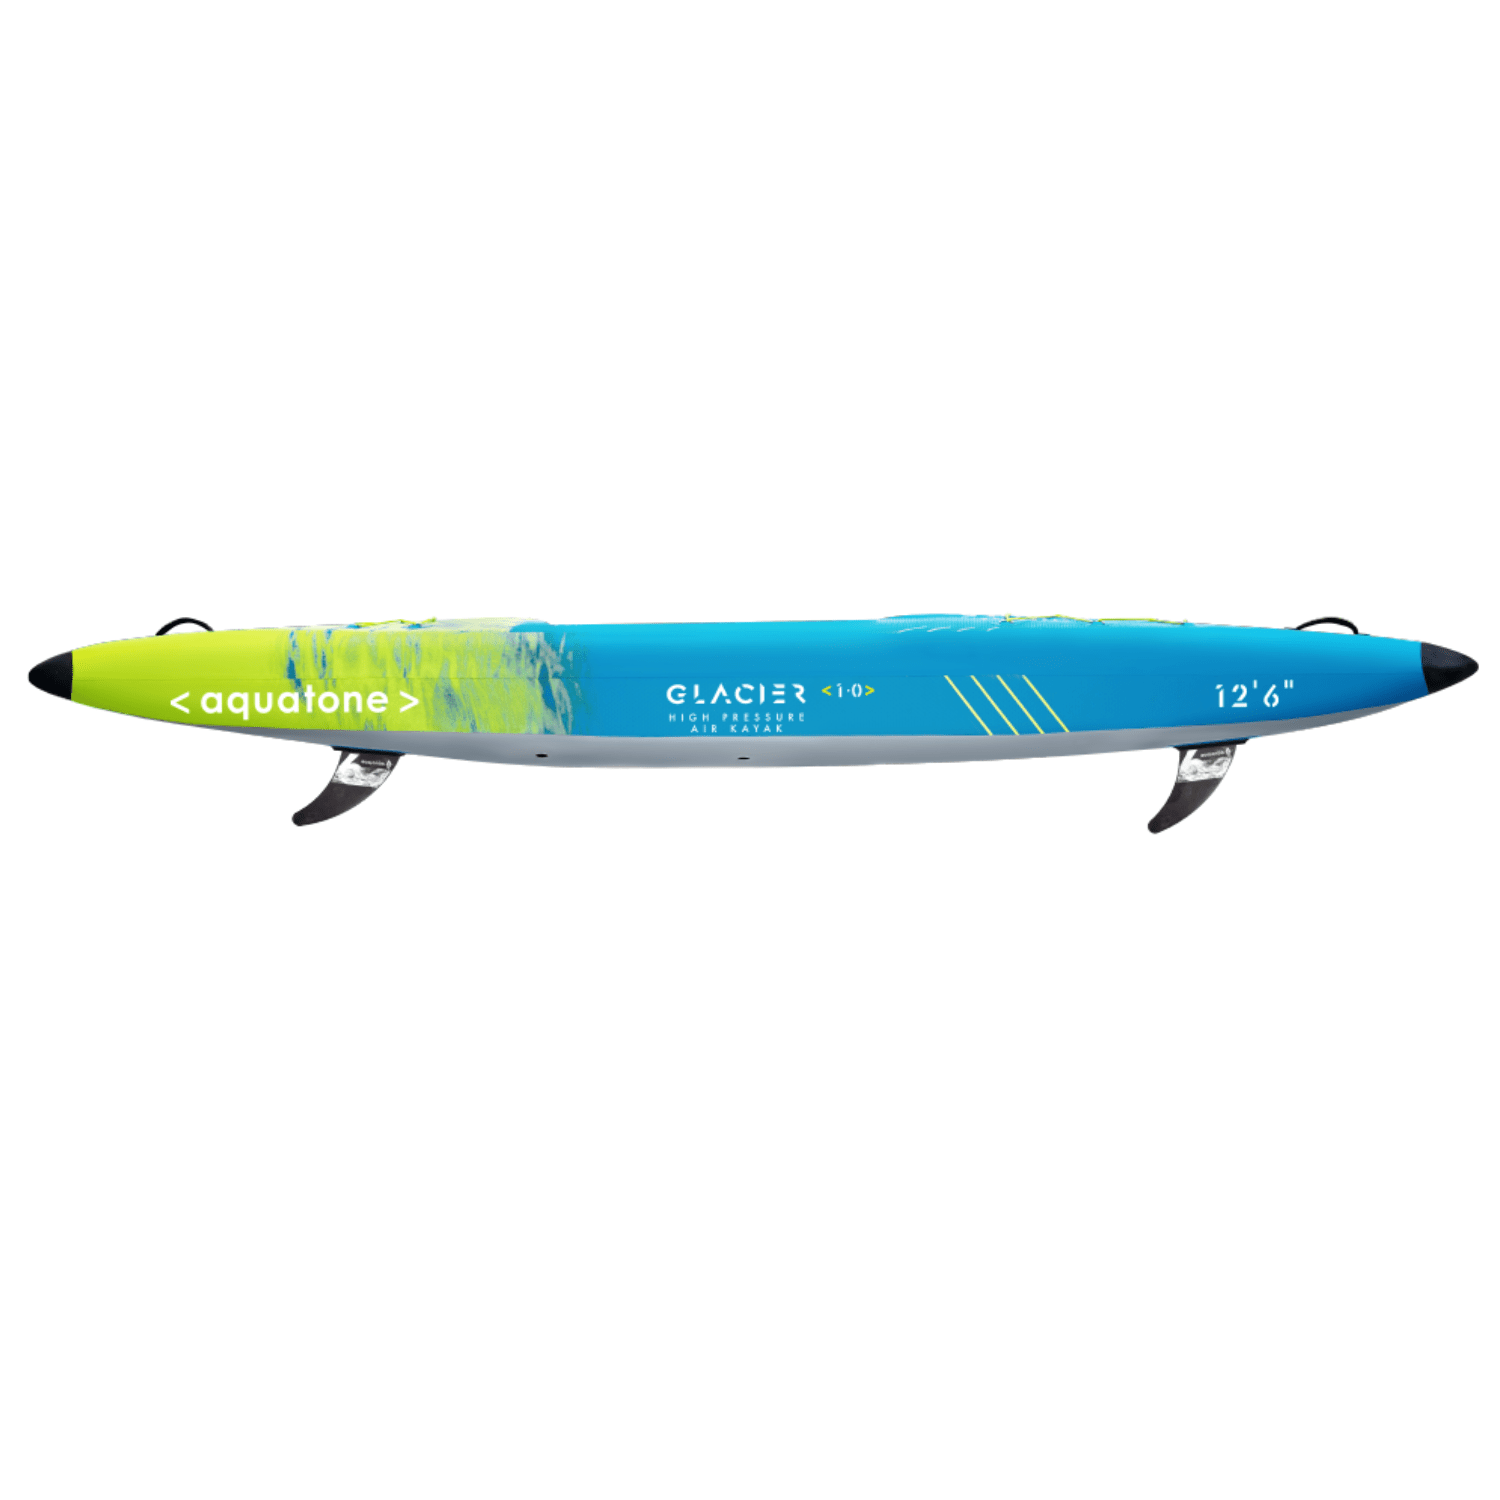 Aquatone GLACIER 12'6 Inflatable Kayak-Inflatable Kayak-Aquatone-2